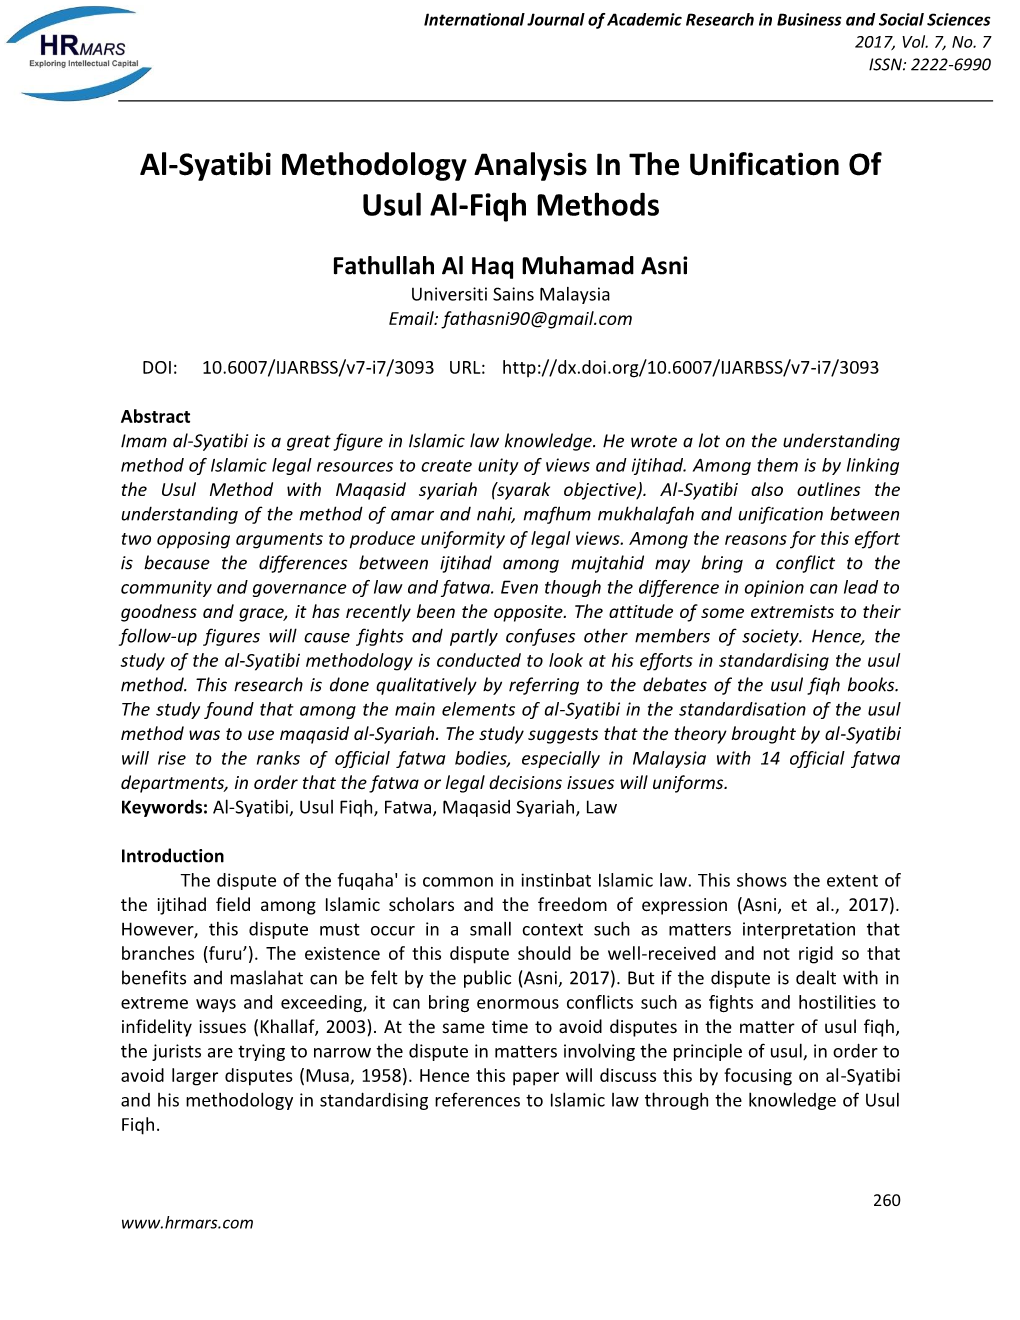 Al-Syatibi Methodology Analysis in the Unification of Usul Al-Fiqh Methods